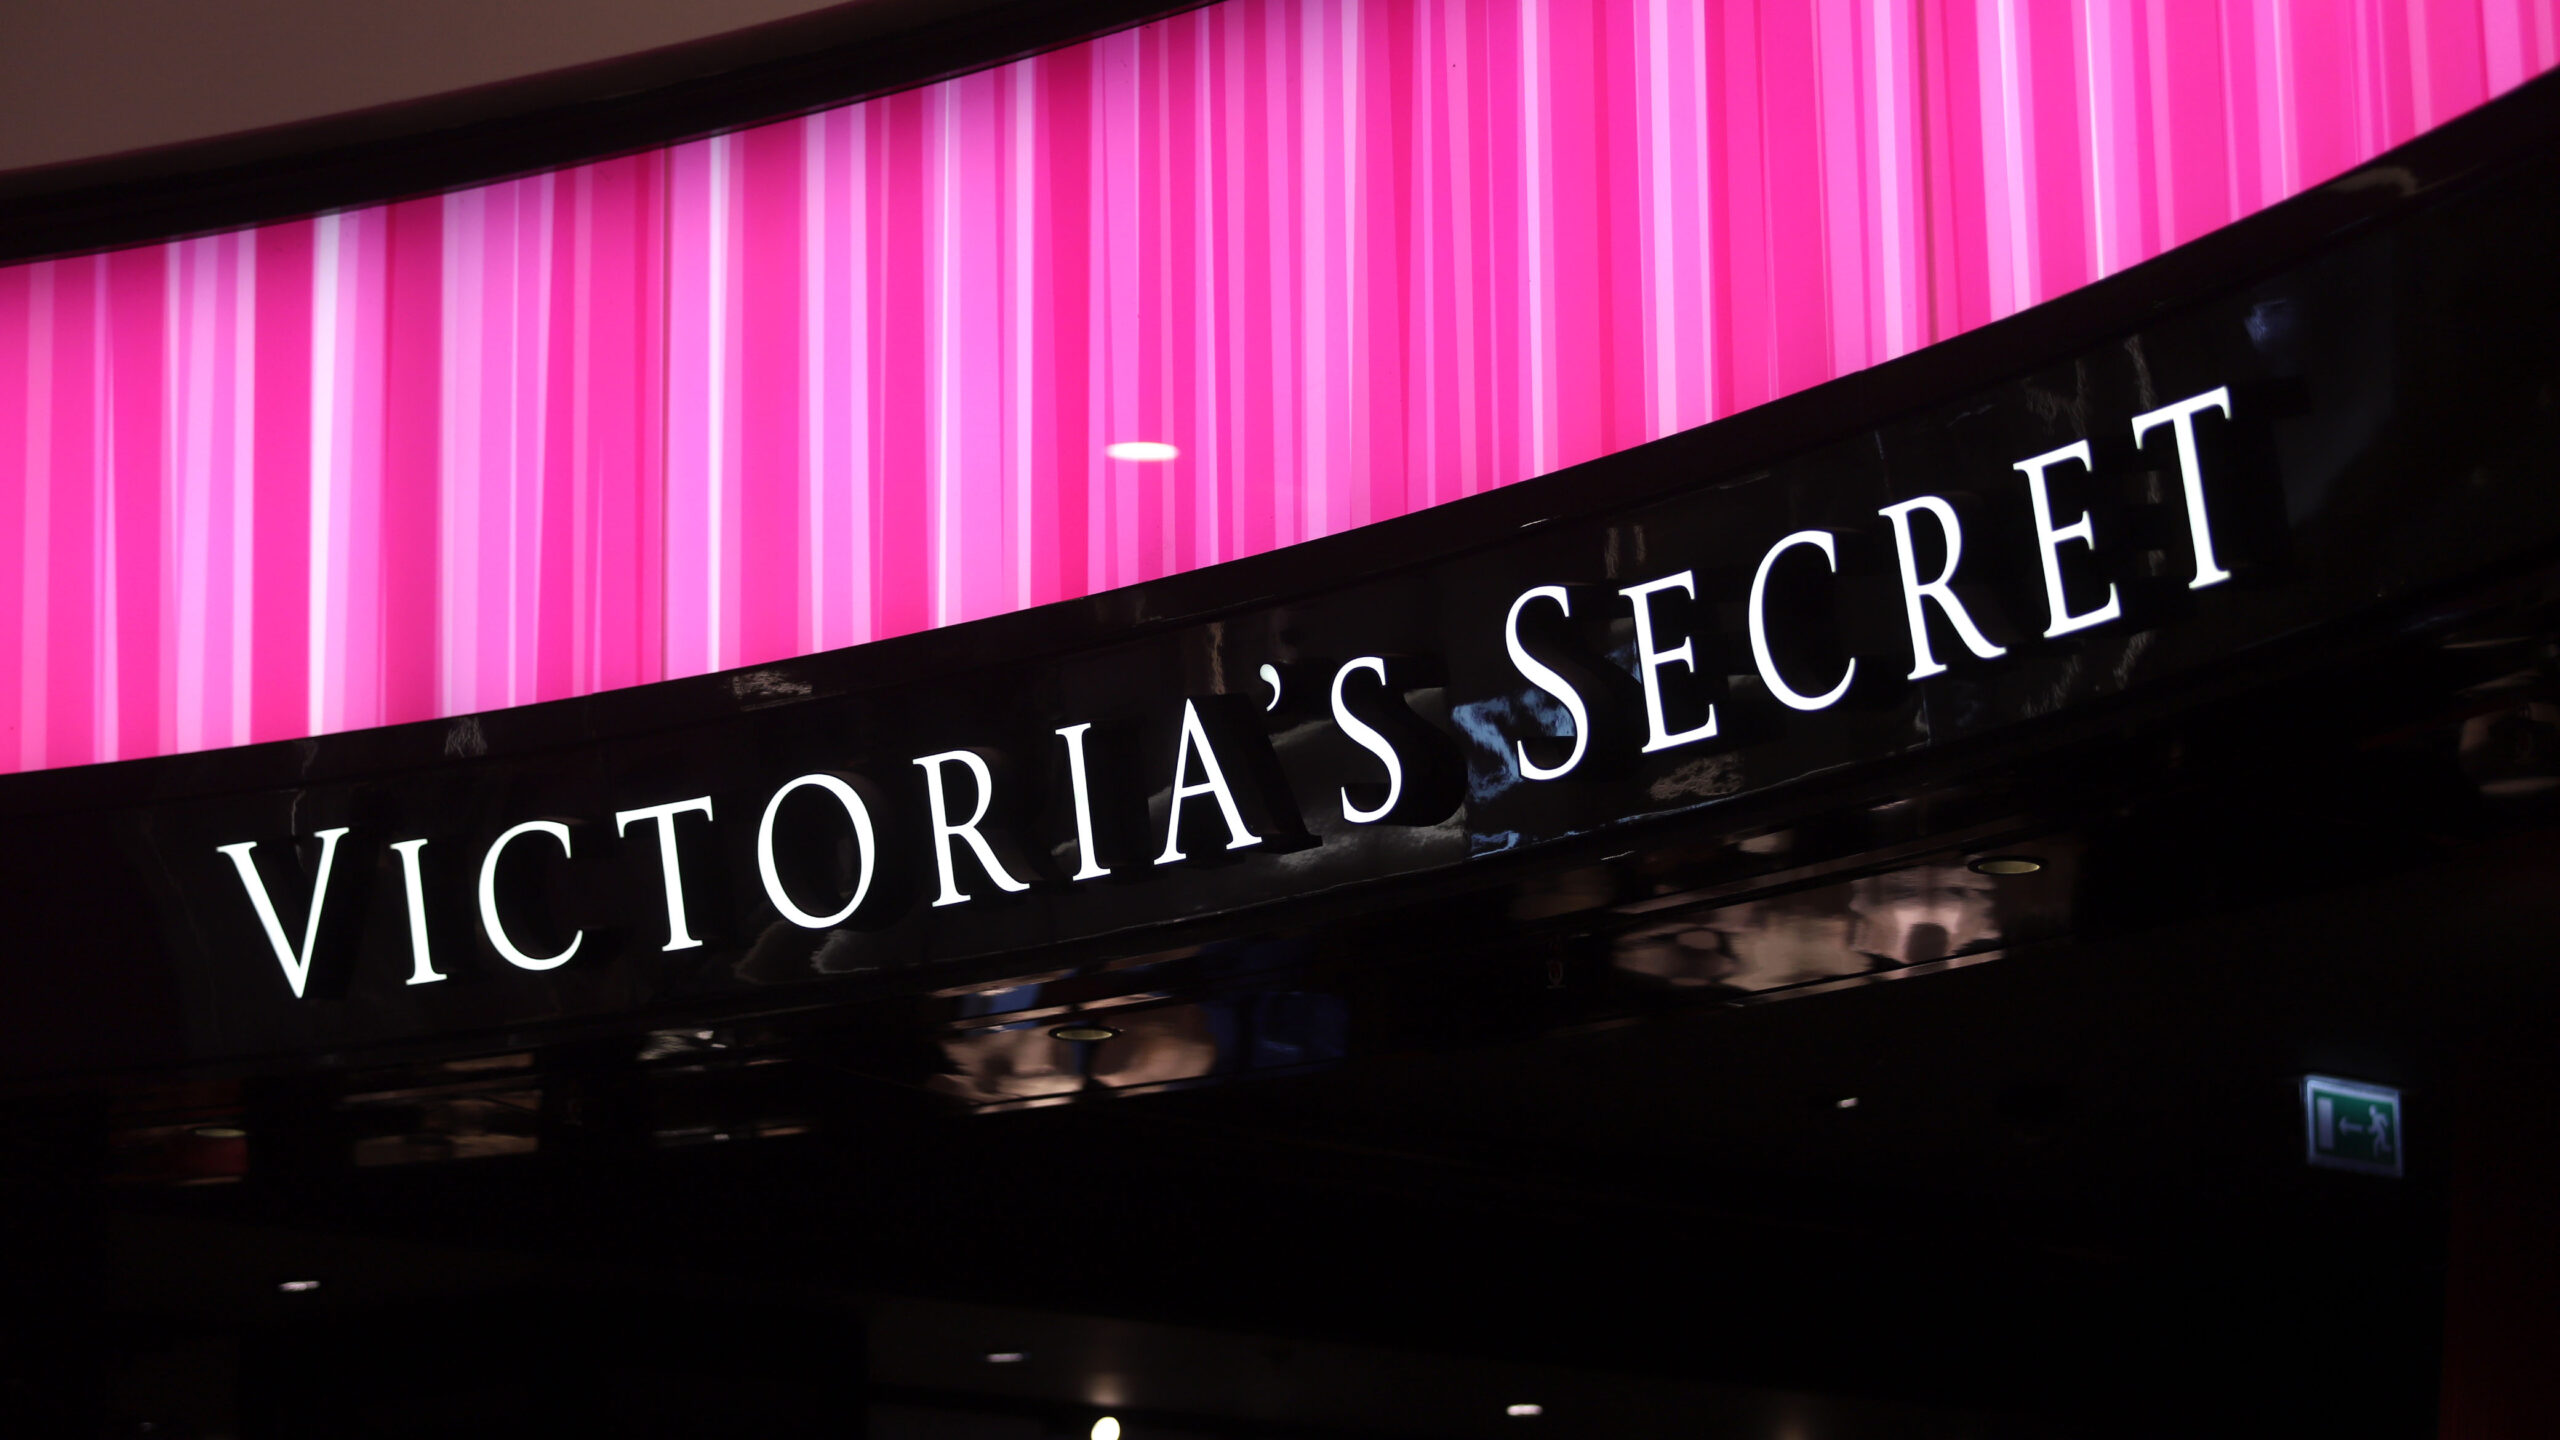 Victoria's Secret cancels fashion show amid ratings drop - BBC News